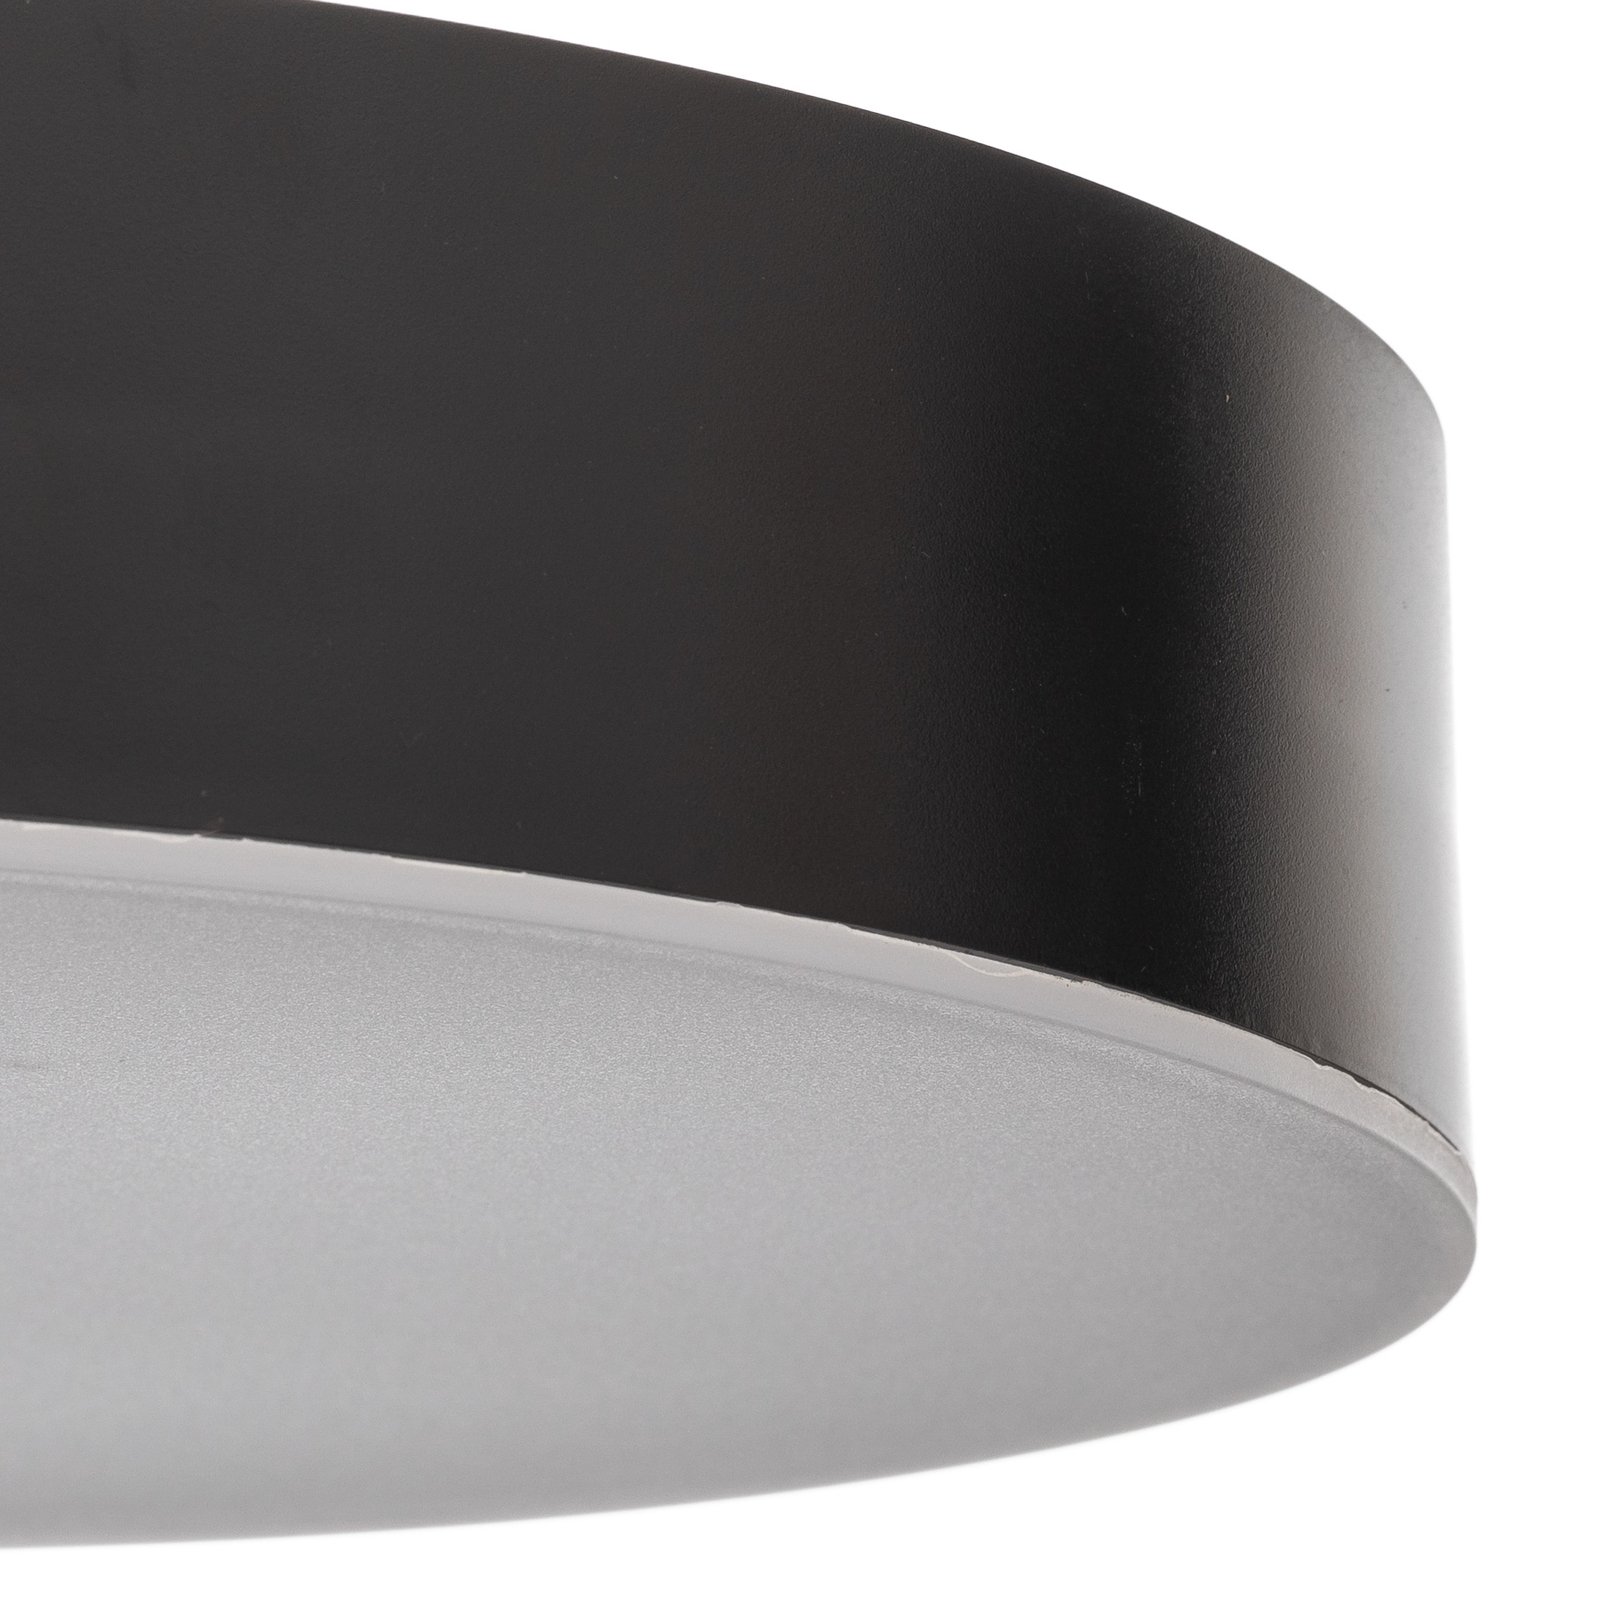 Lyam LED outdoor ceiling lamp, IP65, dark grey